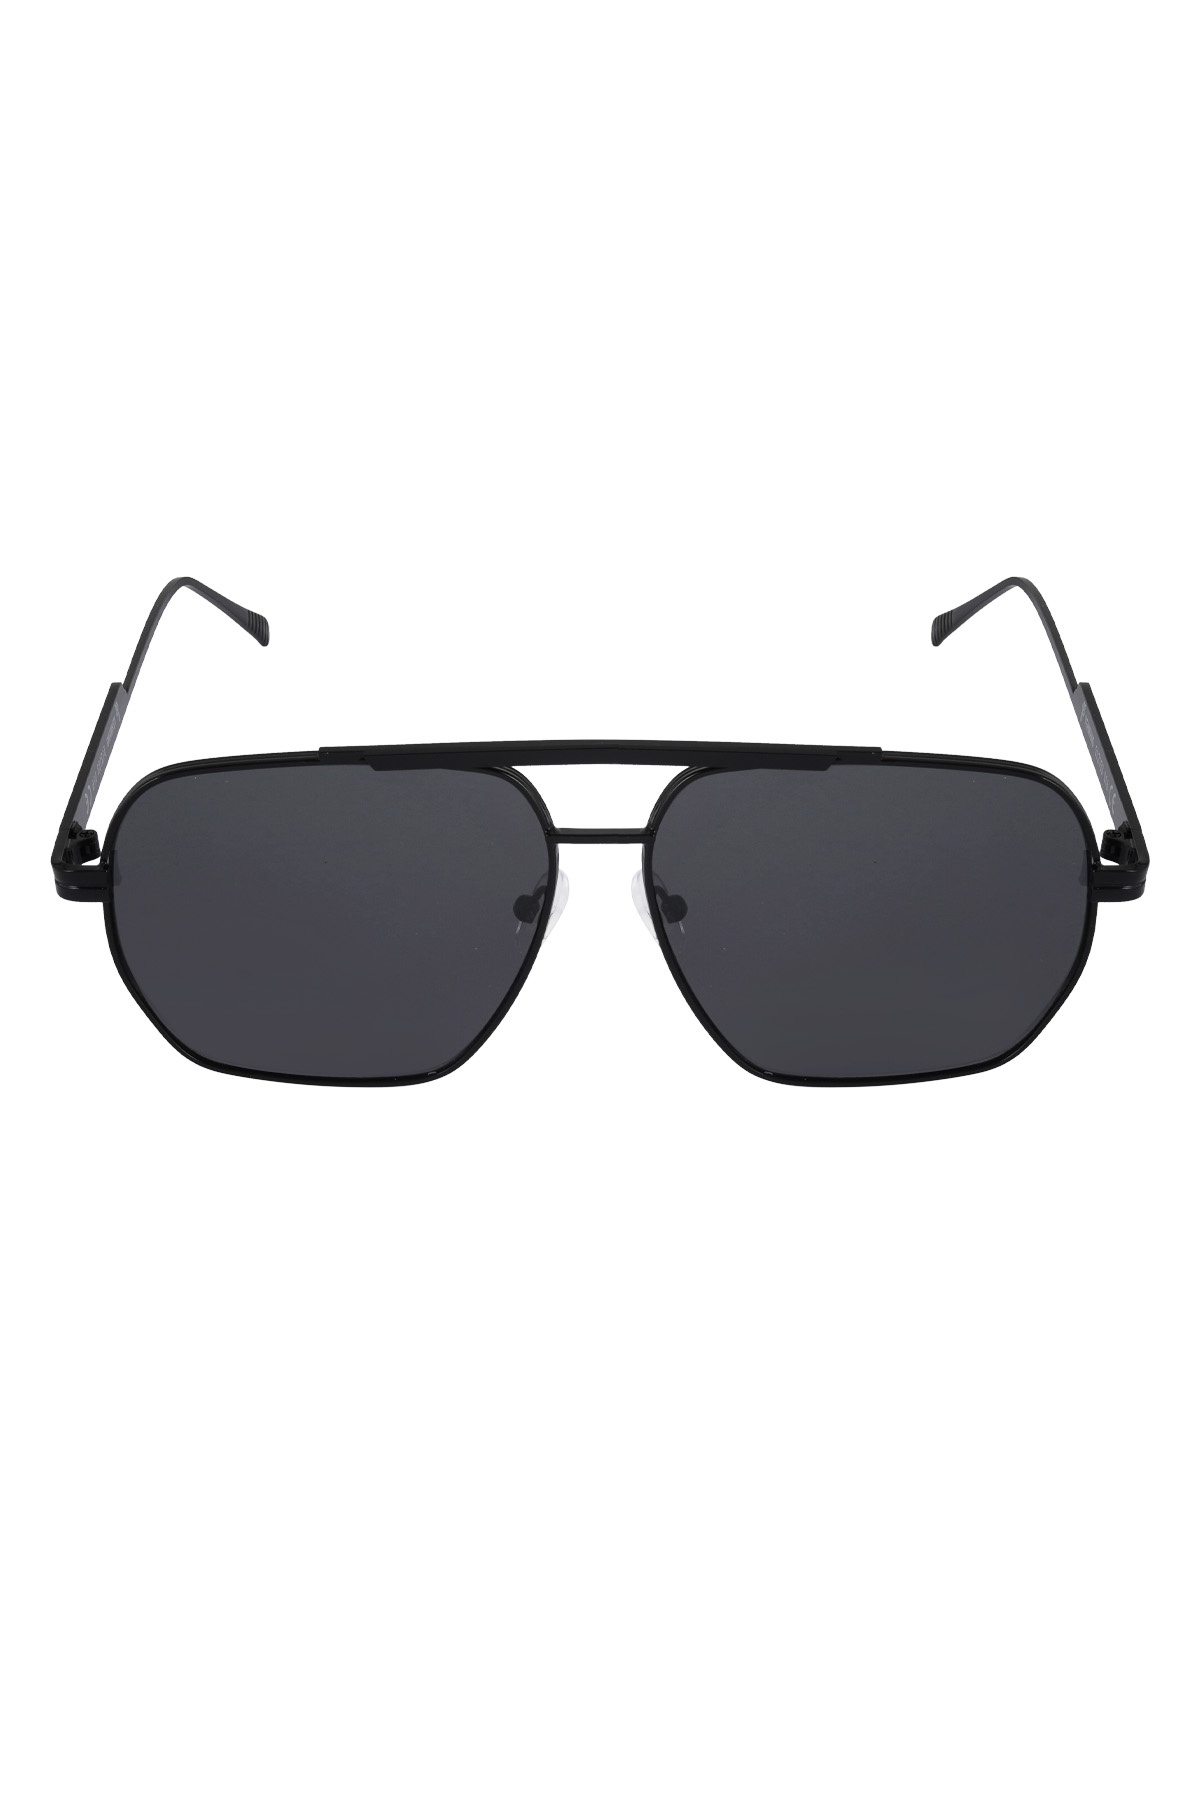 Metal summer sunglasses - Black h5 Picture4